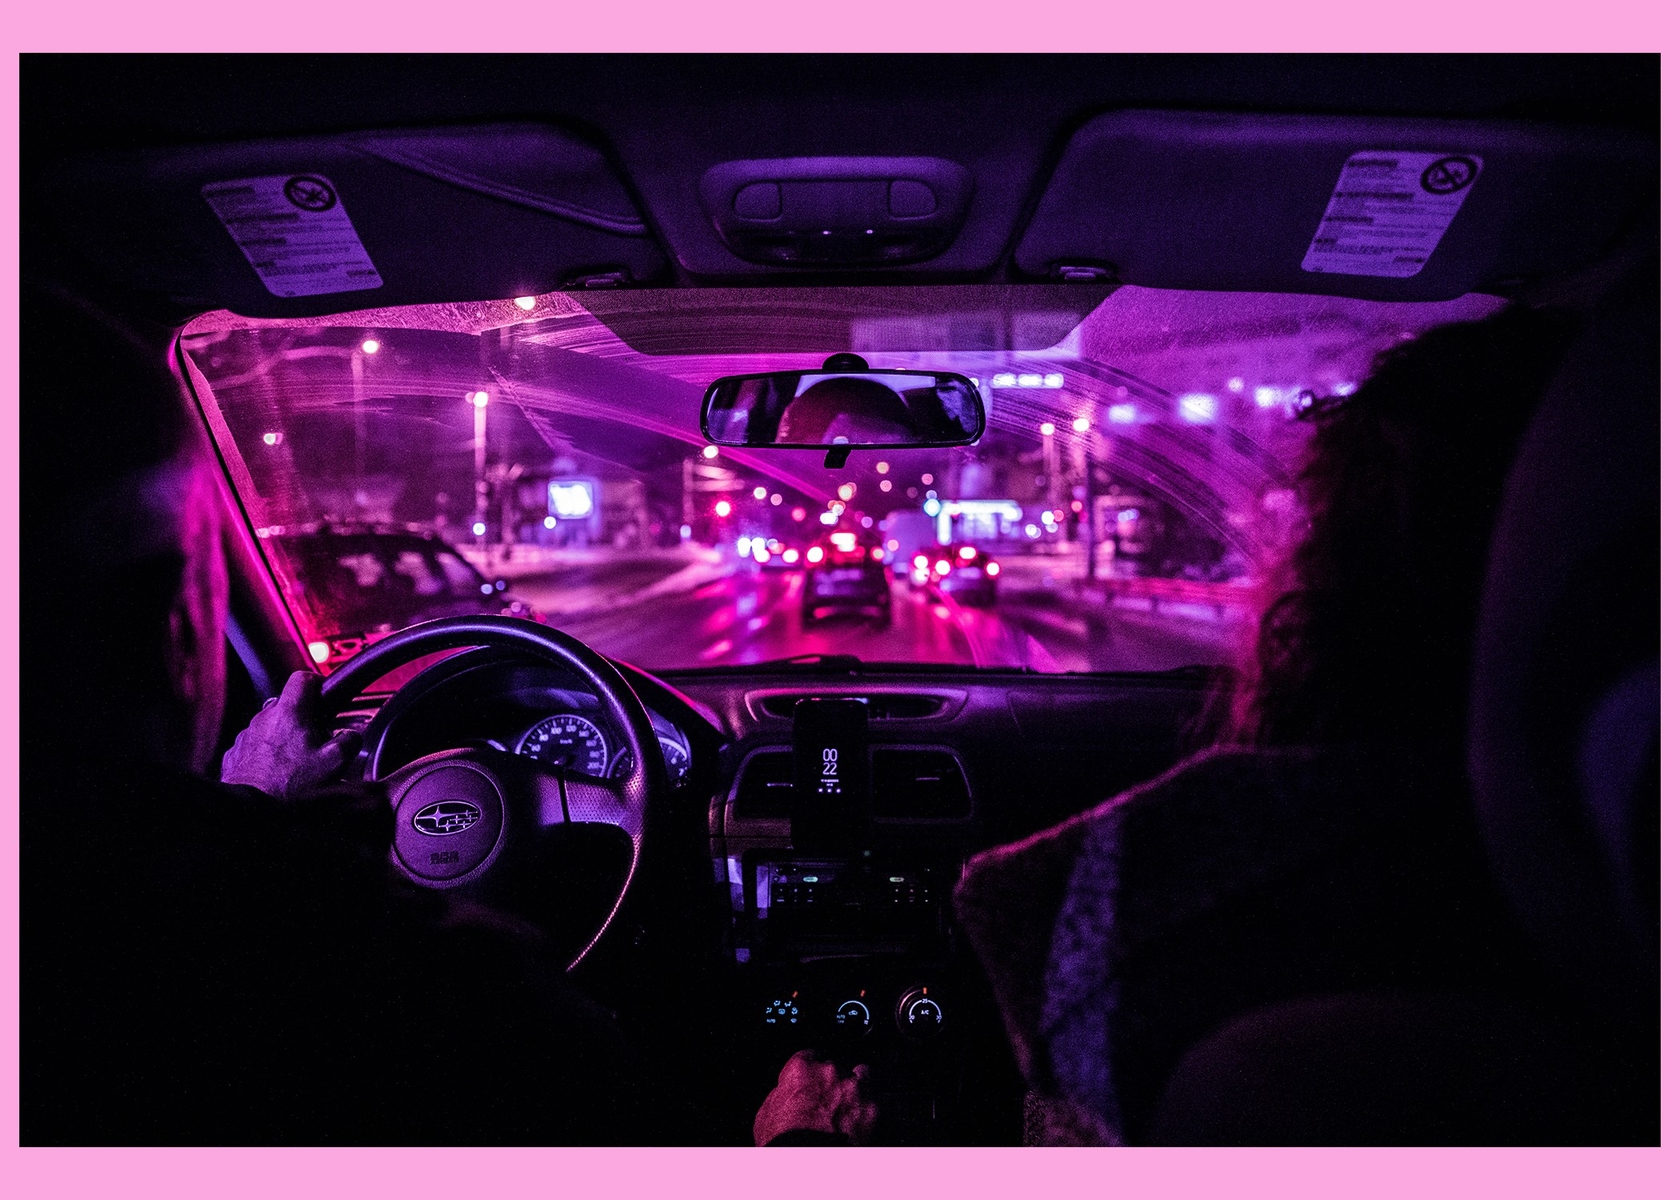 night driving